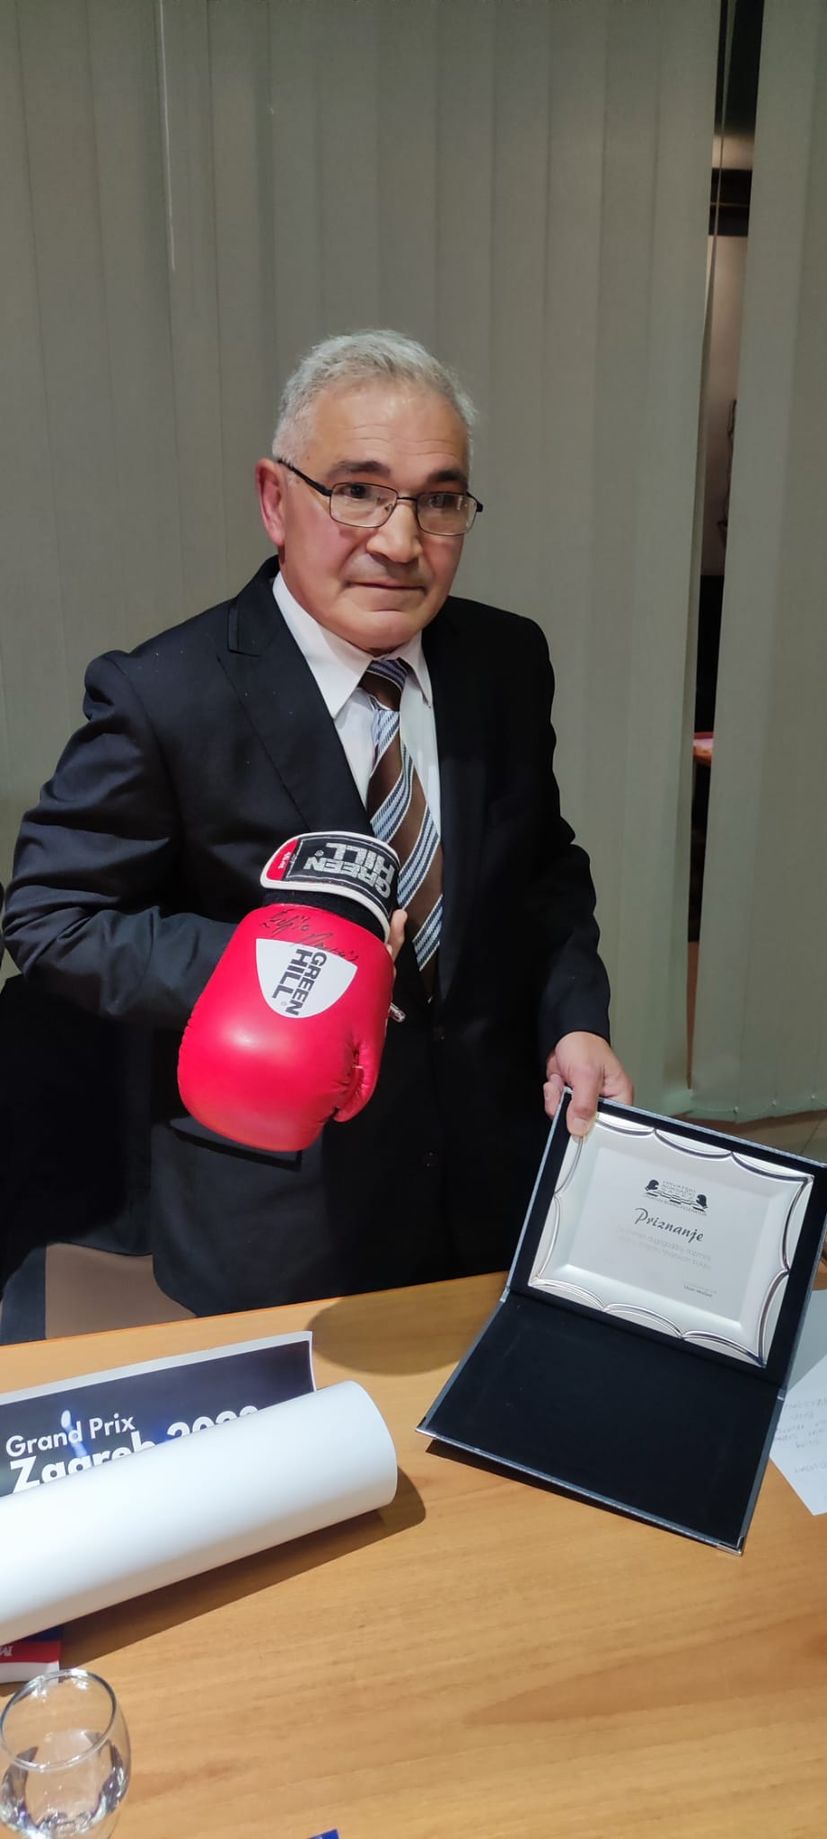  Australian-Croatian boxing champion Ivan Rukavina launches book 